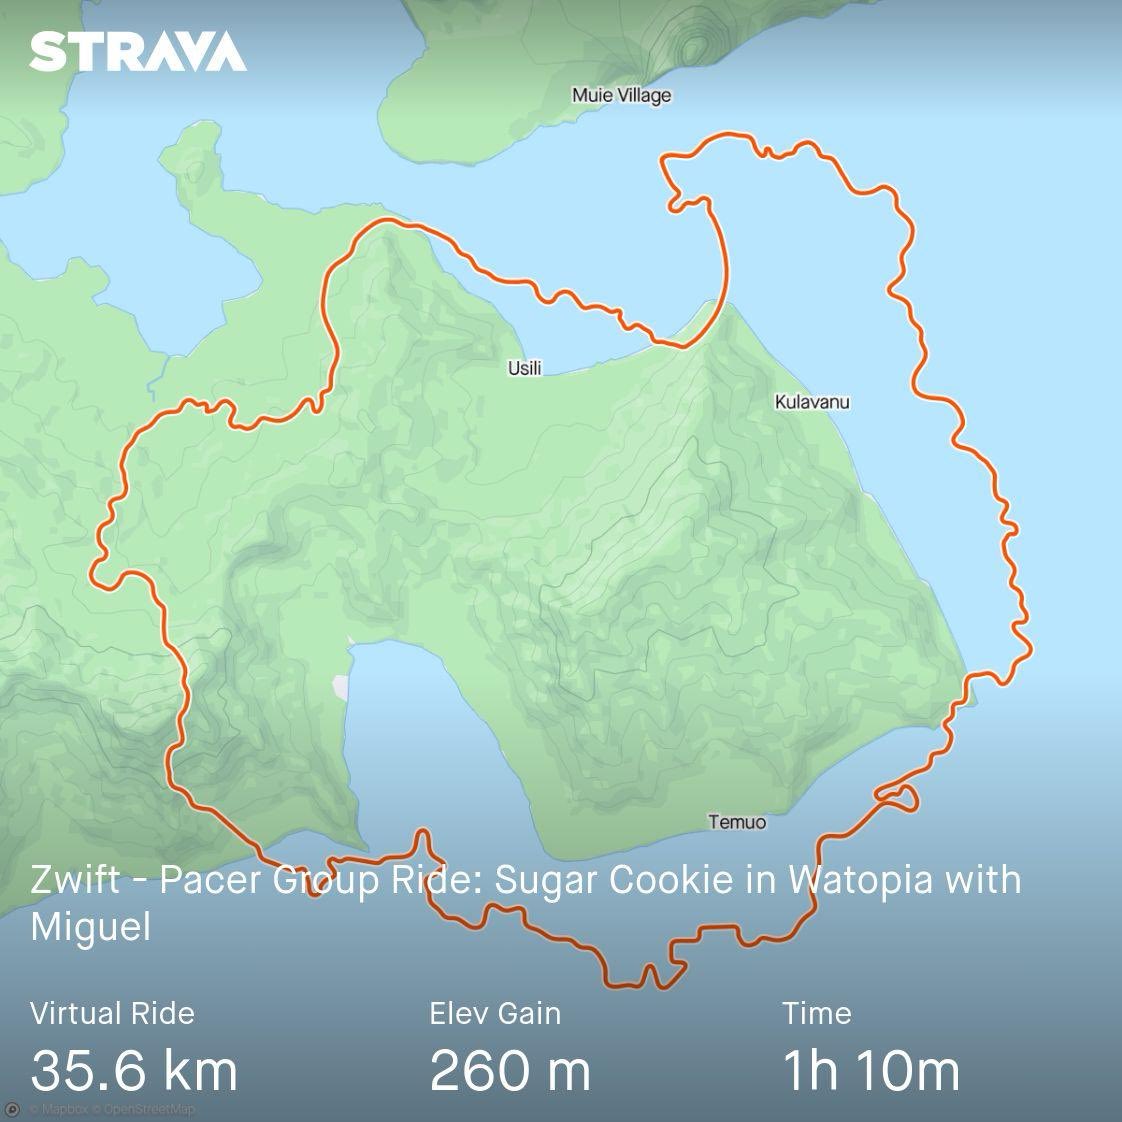 #zwift #gozwift #strava #wahoo #kickr #garmin #beatyesterday #strava #wahooligan #cycling

Check out my activity on Strava.
strava.app.link/qrxNIcDR8Ib